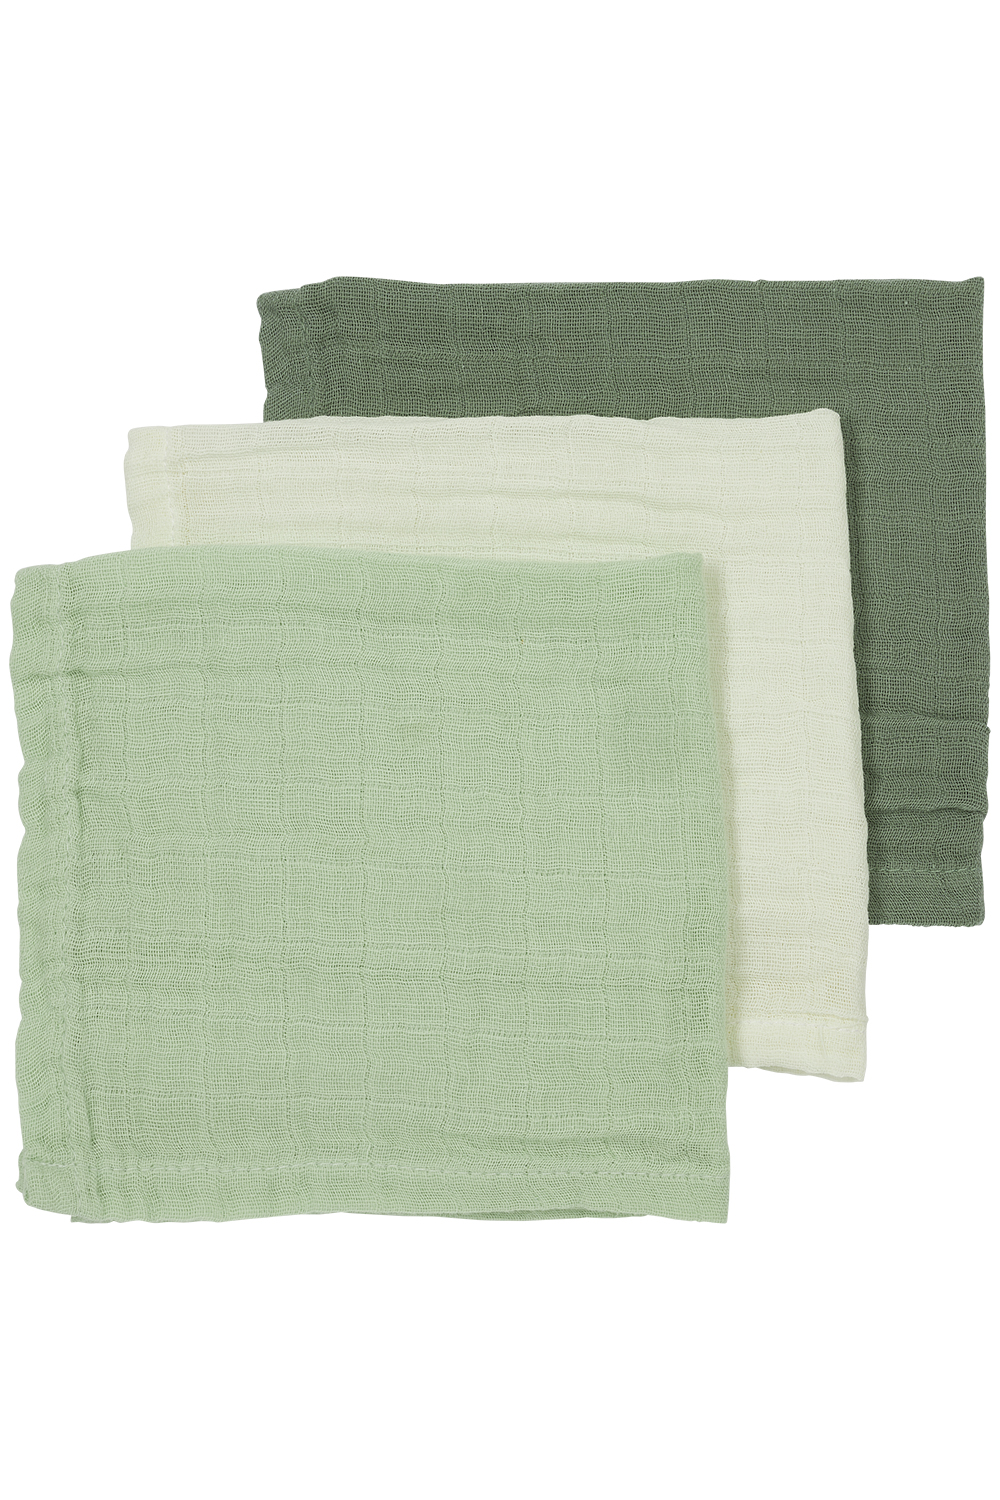 Monddoekjes 3-pack pre-washed hydrofiel Uni - offwhite/soft green/forest green - 30x30cm